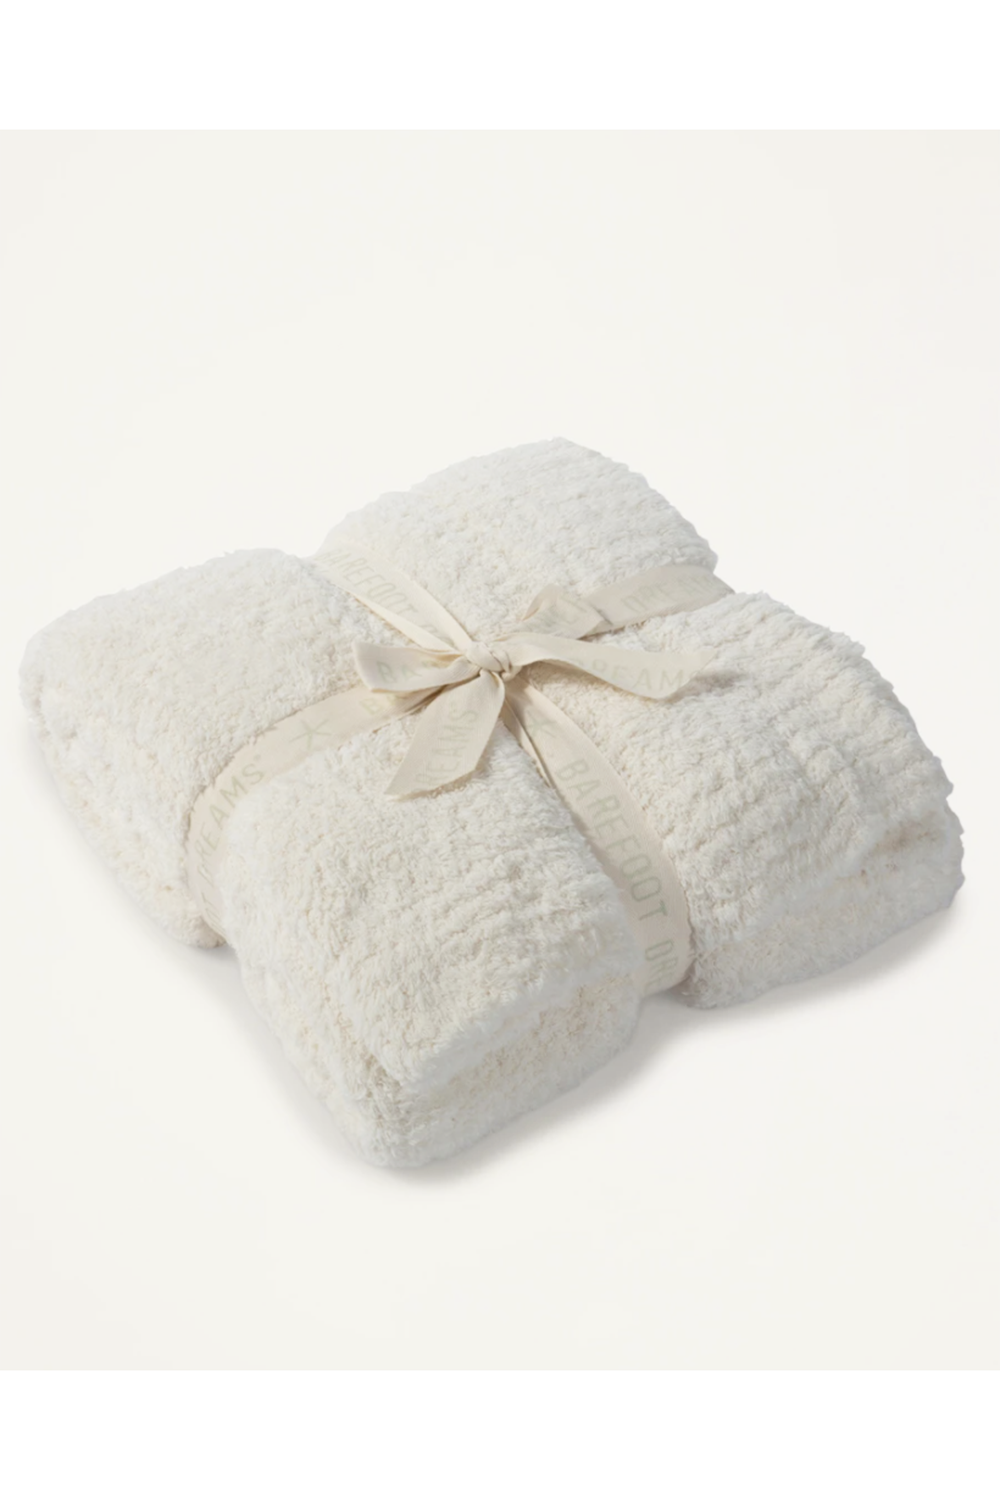 CozyChic Throw Blanket - Cream